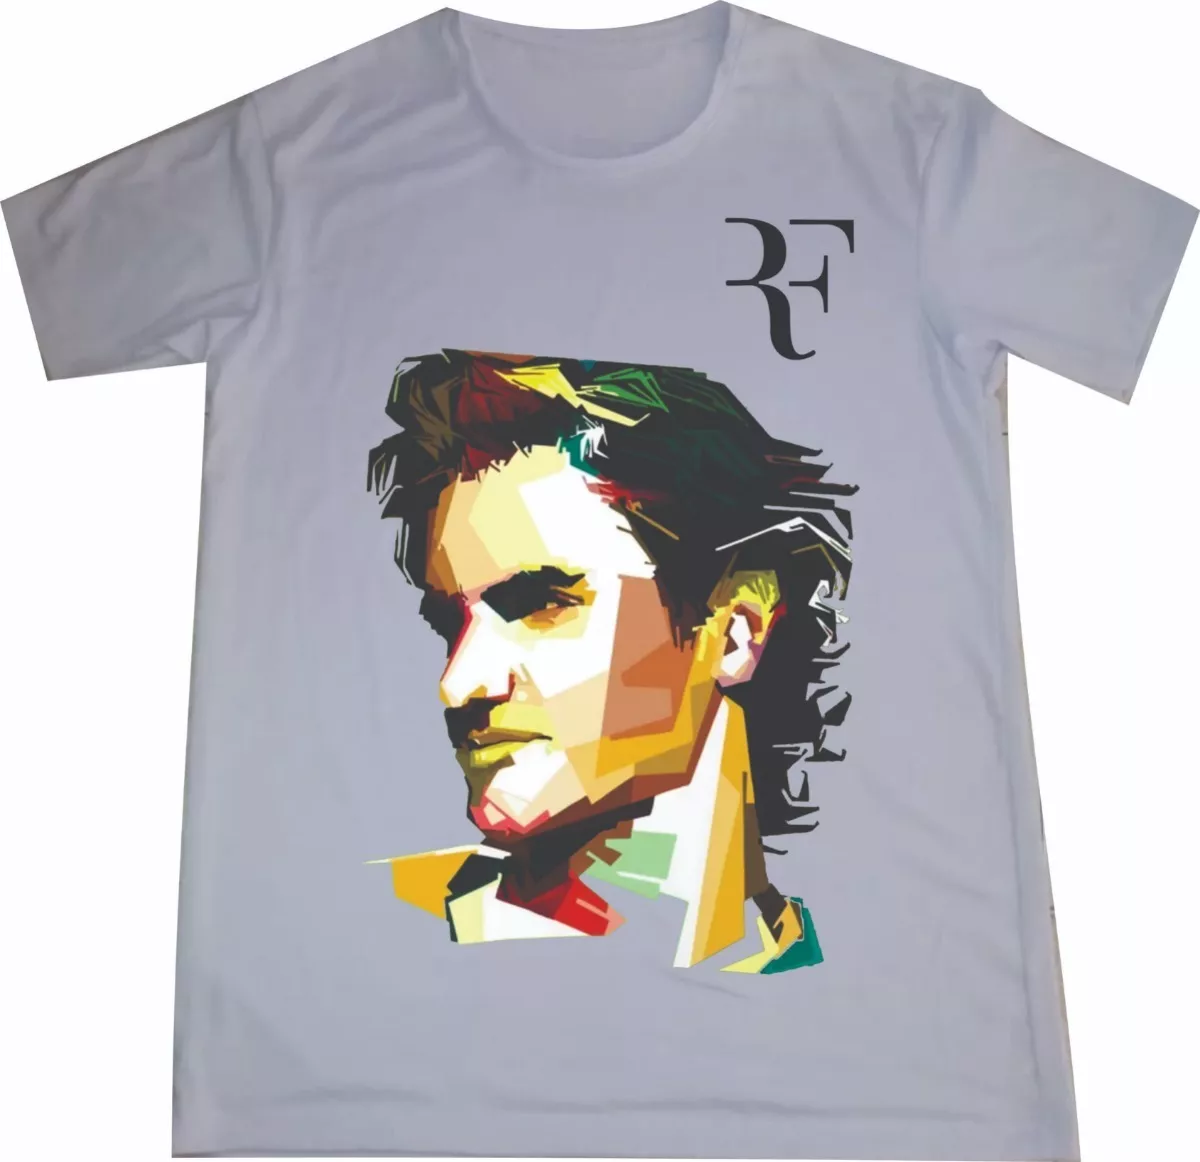 Camisetas Roger Federer Adultos Niños